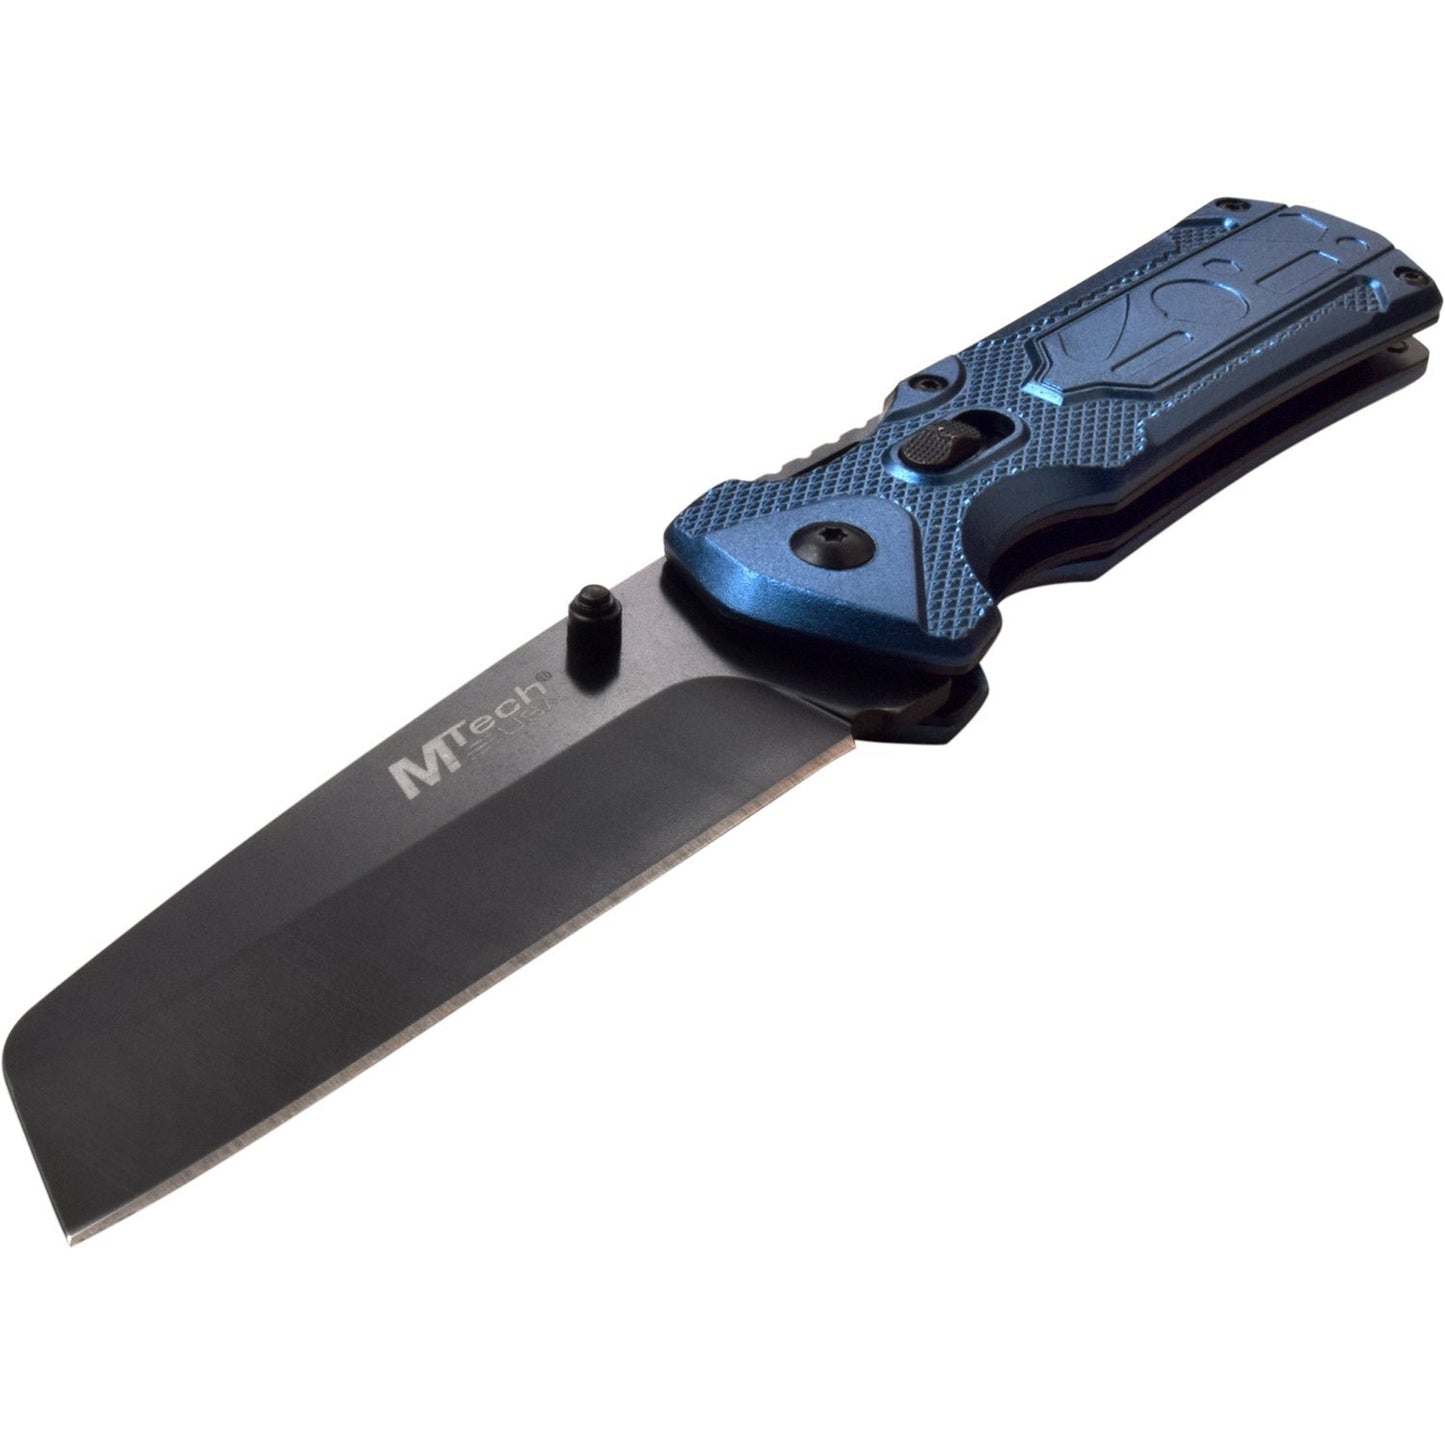 Mtech Mtech Sheepsfoot Multi-Tool Fine Edge Folding Blade Knife - Blue 8 Inches Overall #mt-1104Bl Dark Slate Blue